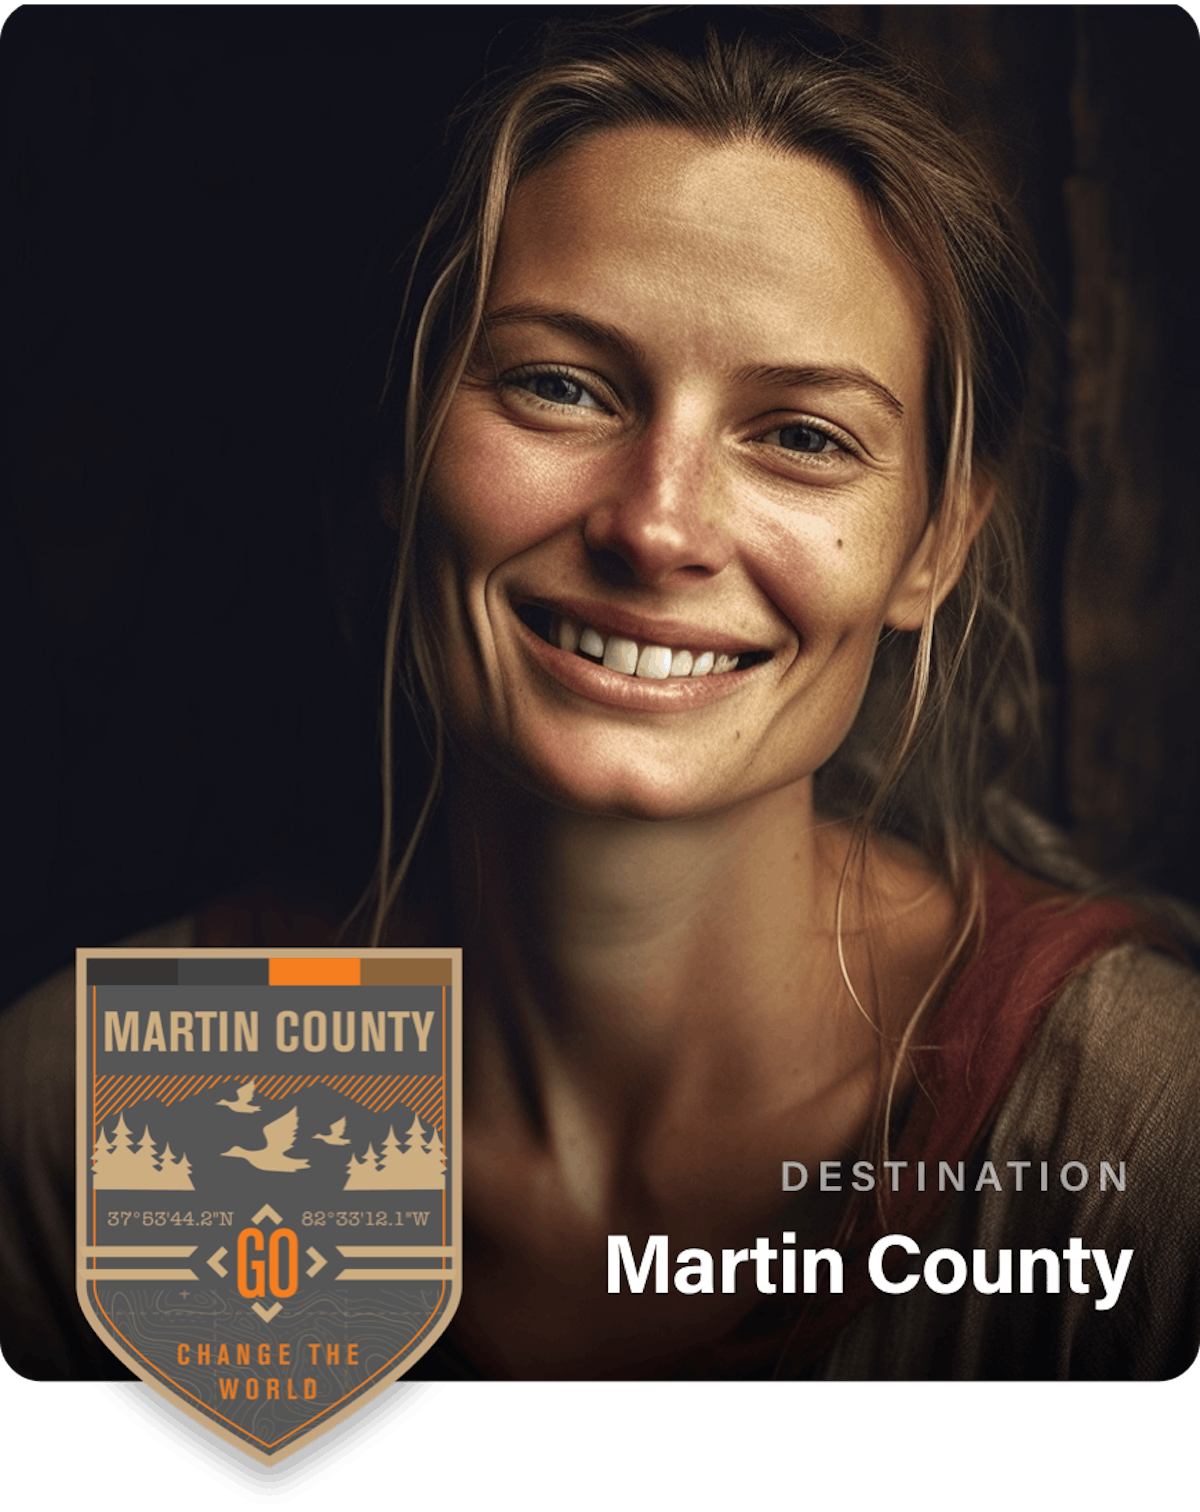 image of martin county destination card